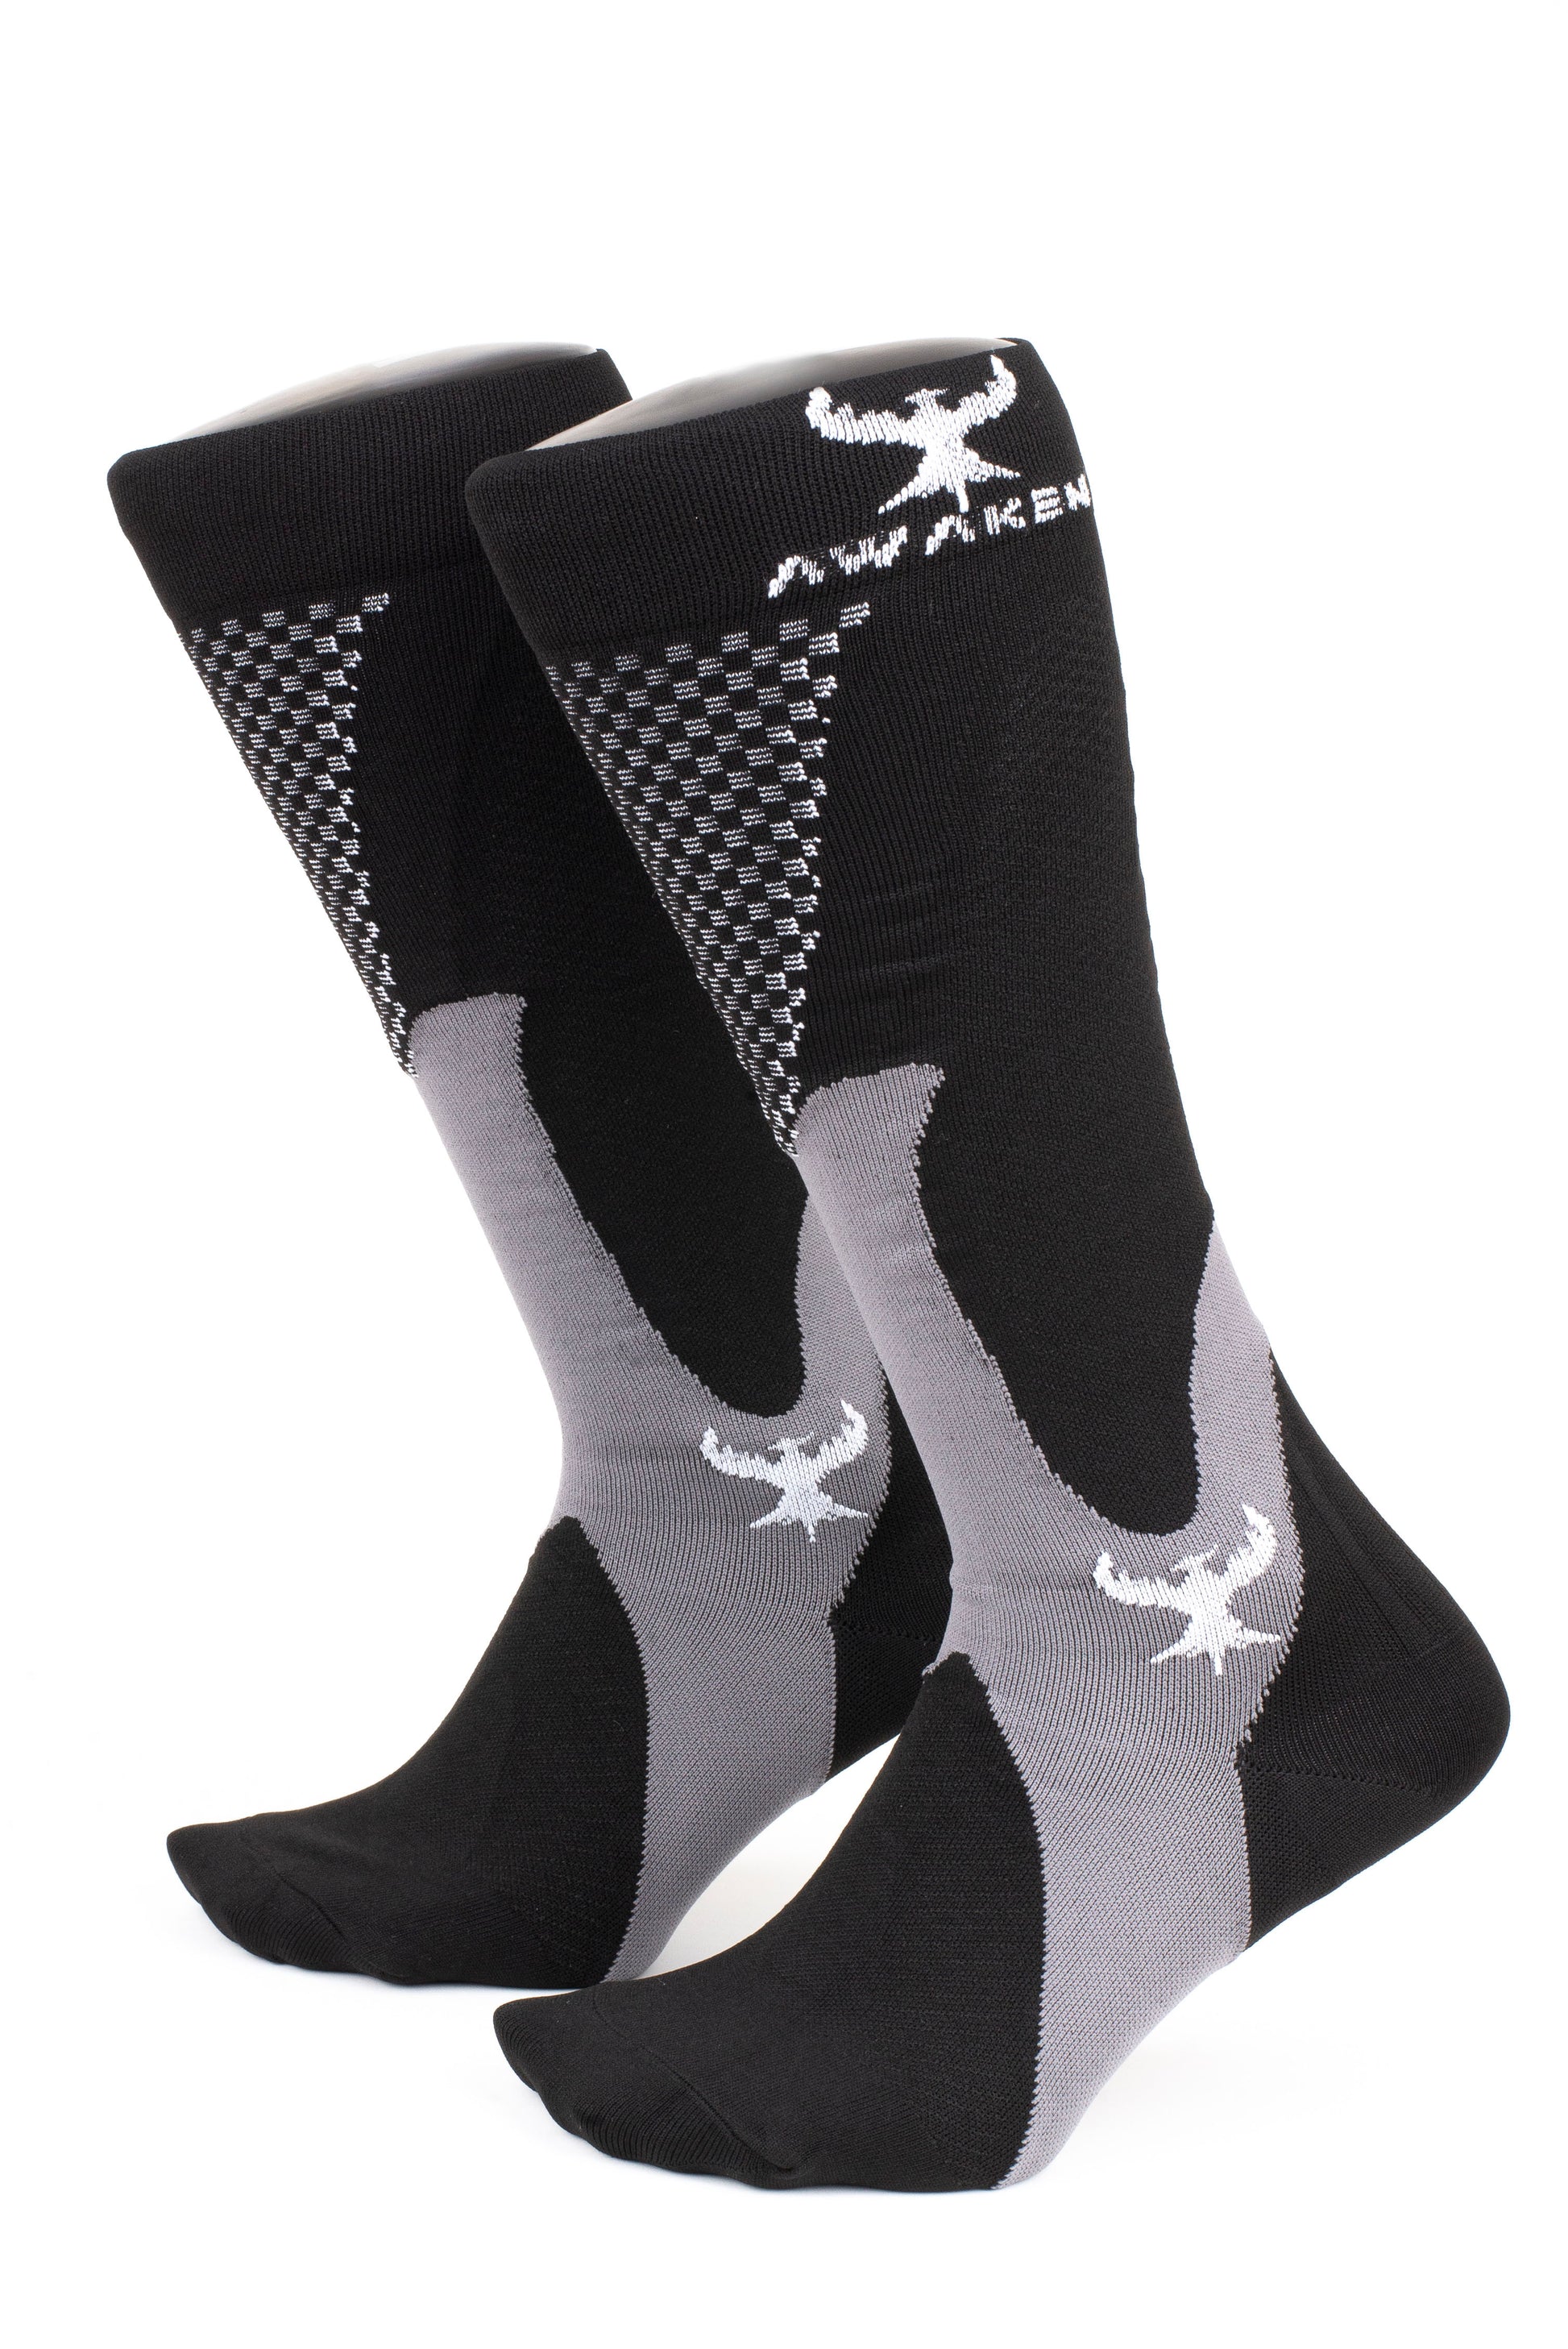 Compression Socks for Men & Women (20-30mmHg) for Sports, Medical or P -  Everyday Crosstrain